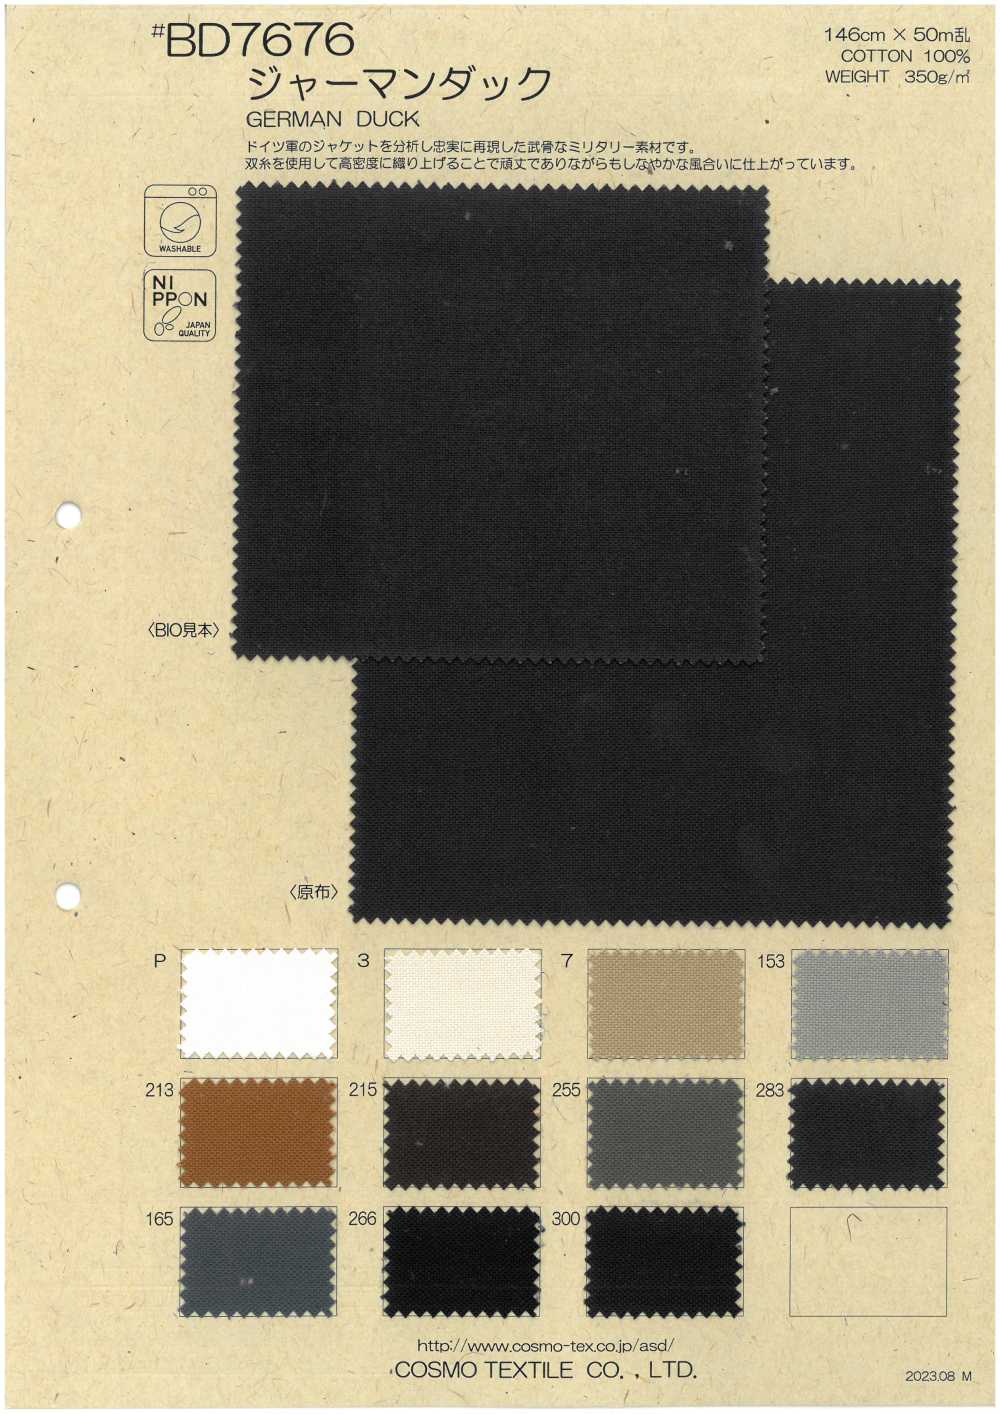 BD7676 Deutsche Ente[Textilgewebe] COSMO TEXTILE